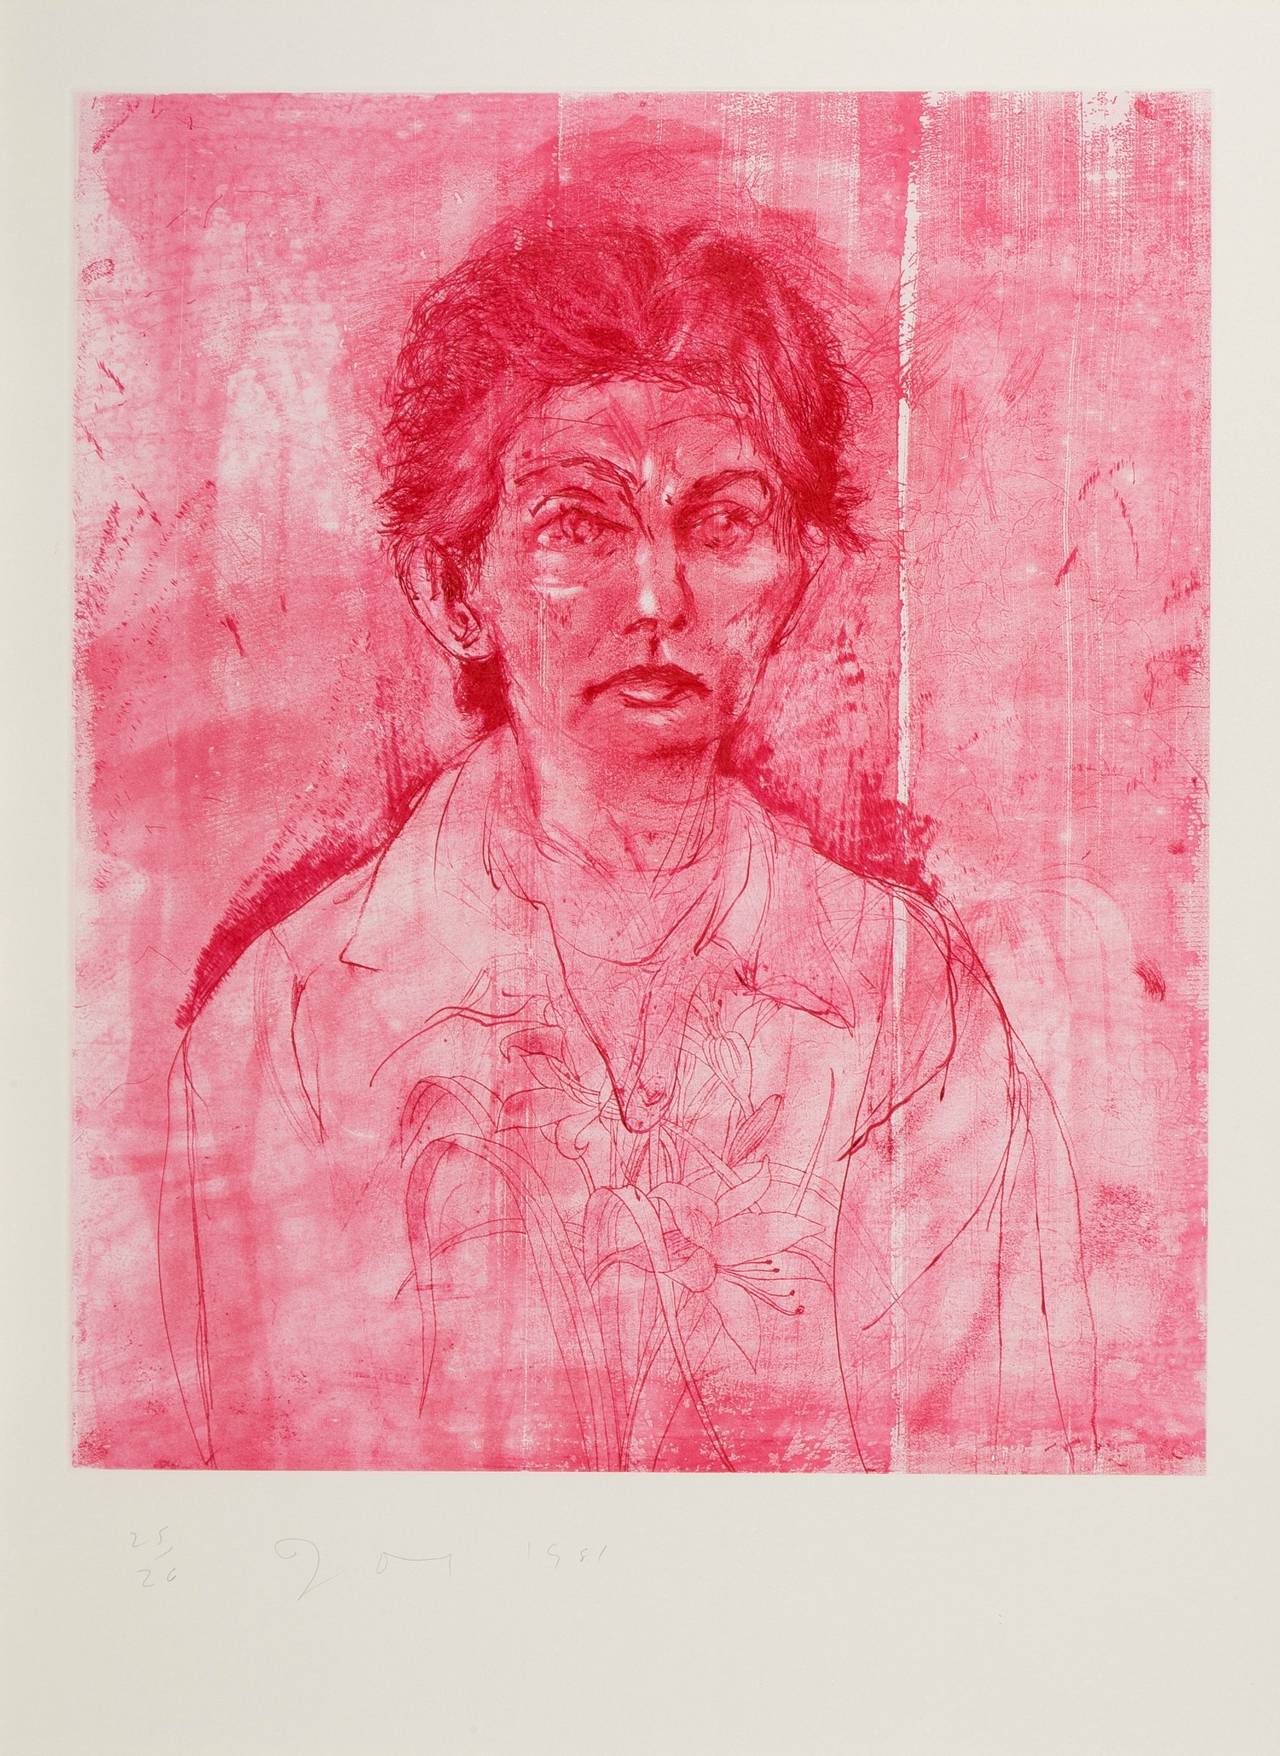 Nancy Outside in july XVII in red - Print by Jim Dine